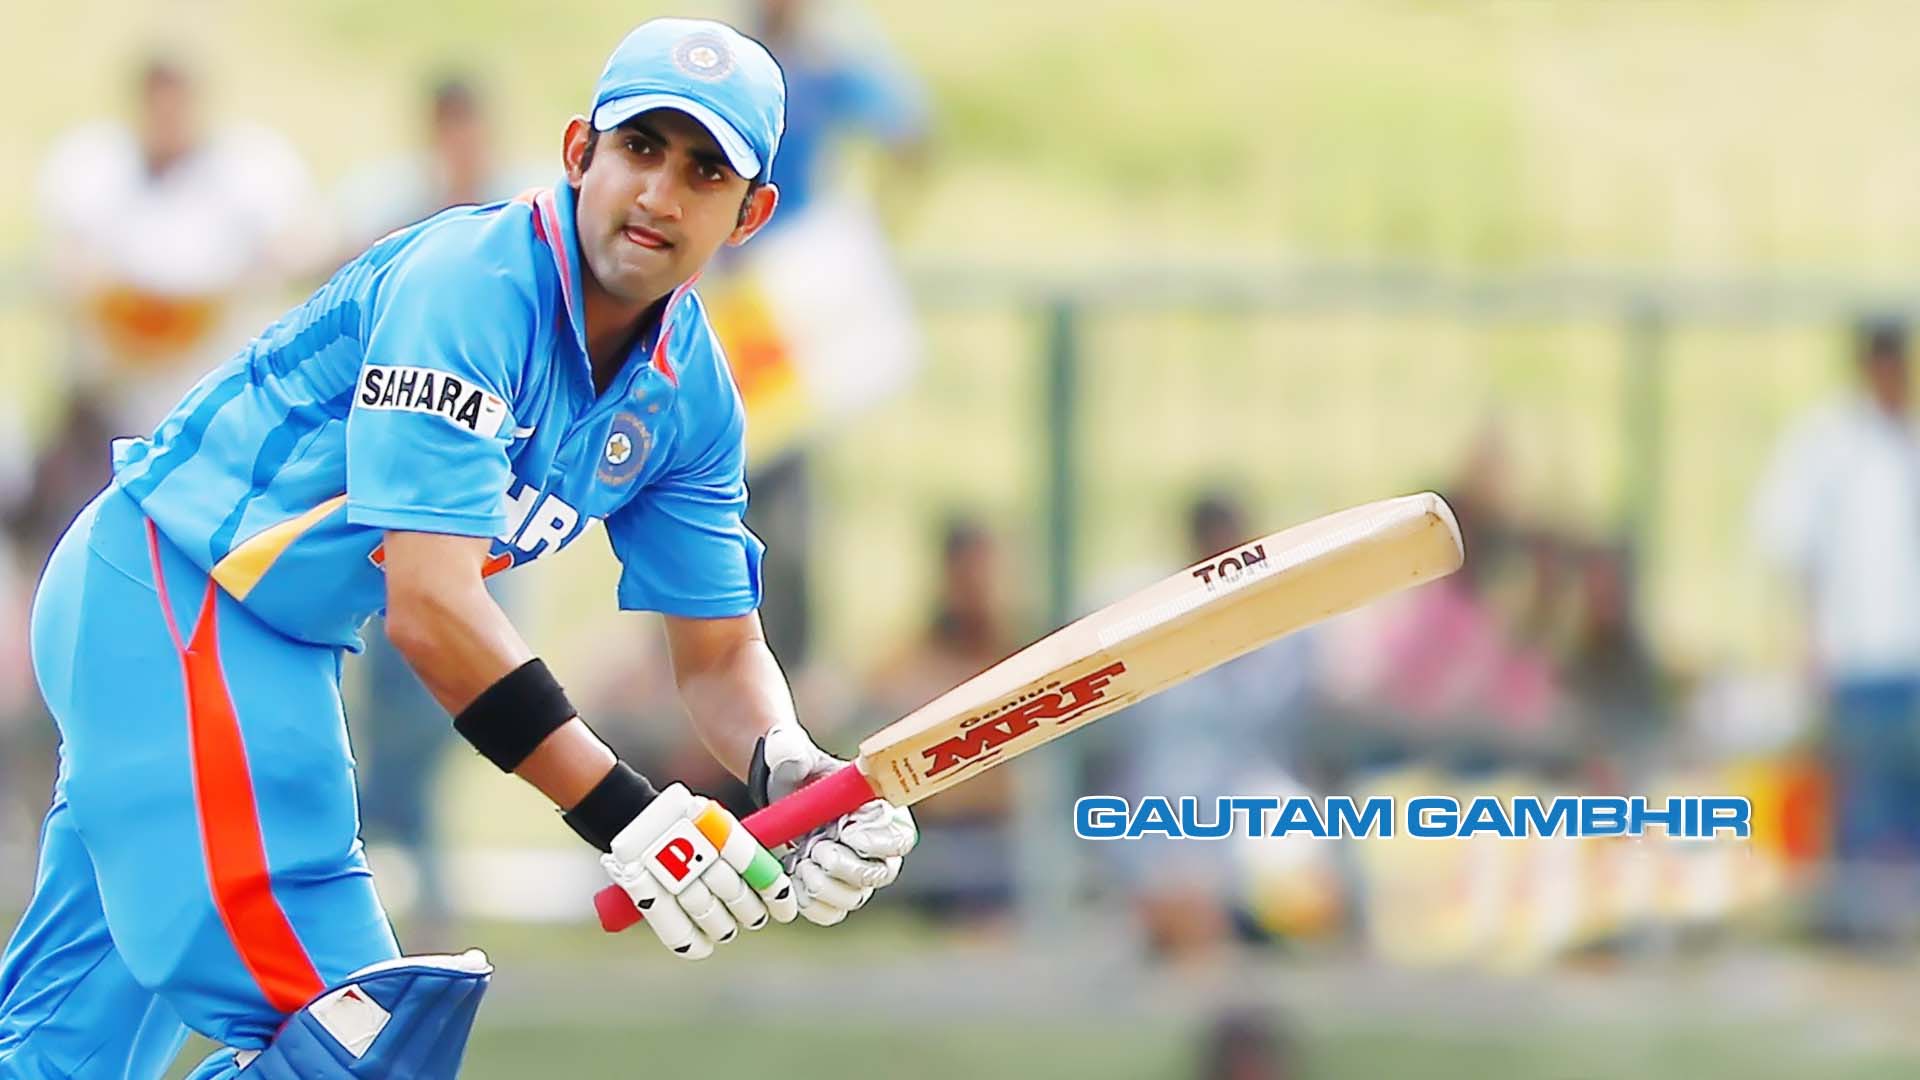 Gautam gambhir indian cricketer wallpaper Indian cricketer